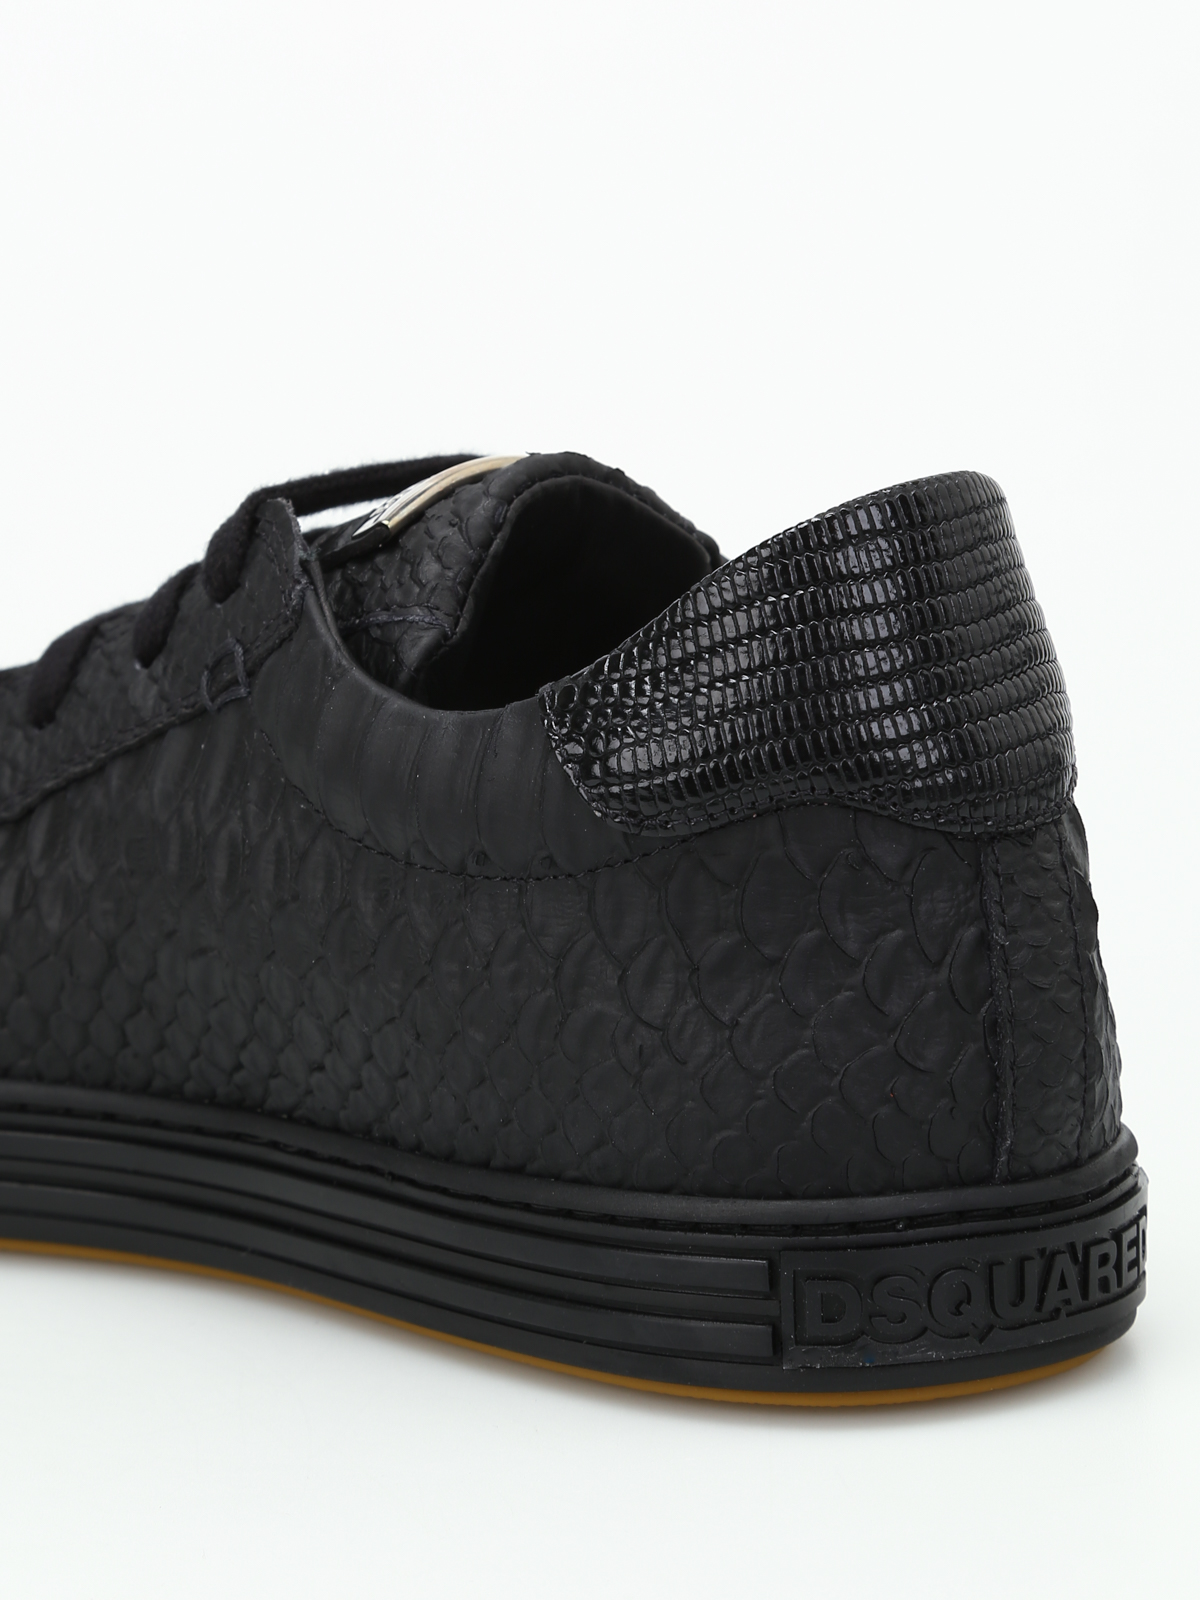 dsquared2 tennisclub sneakers black